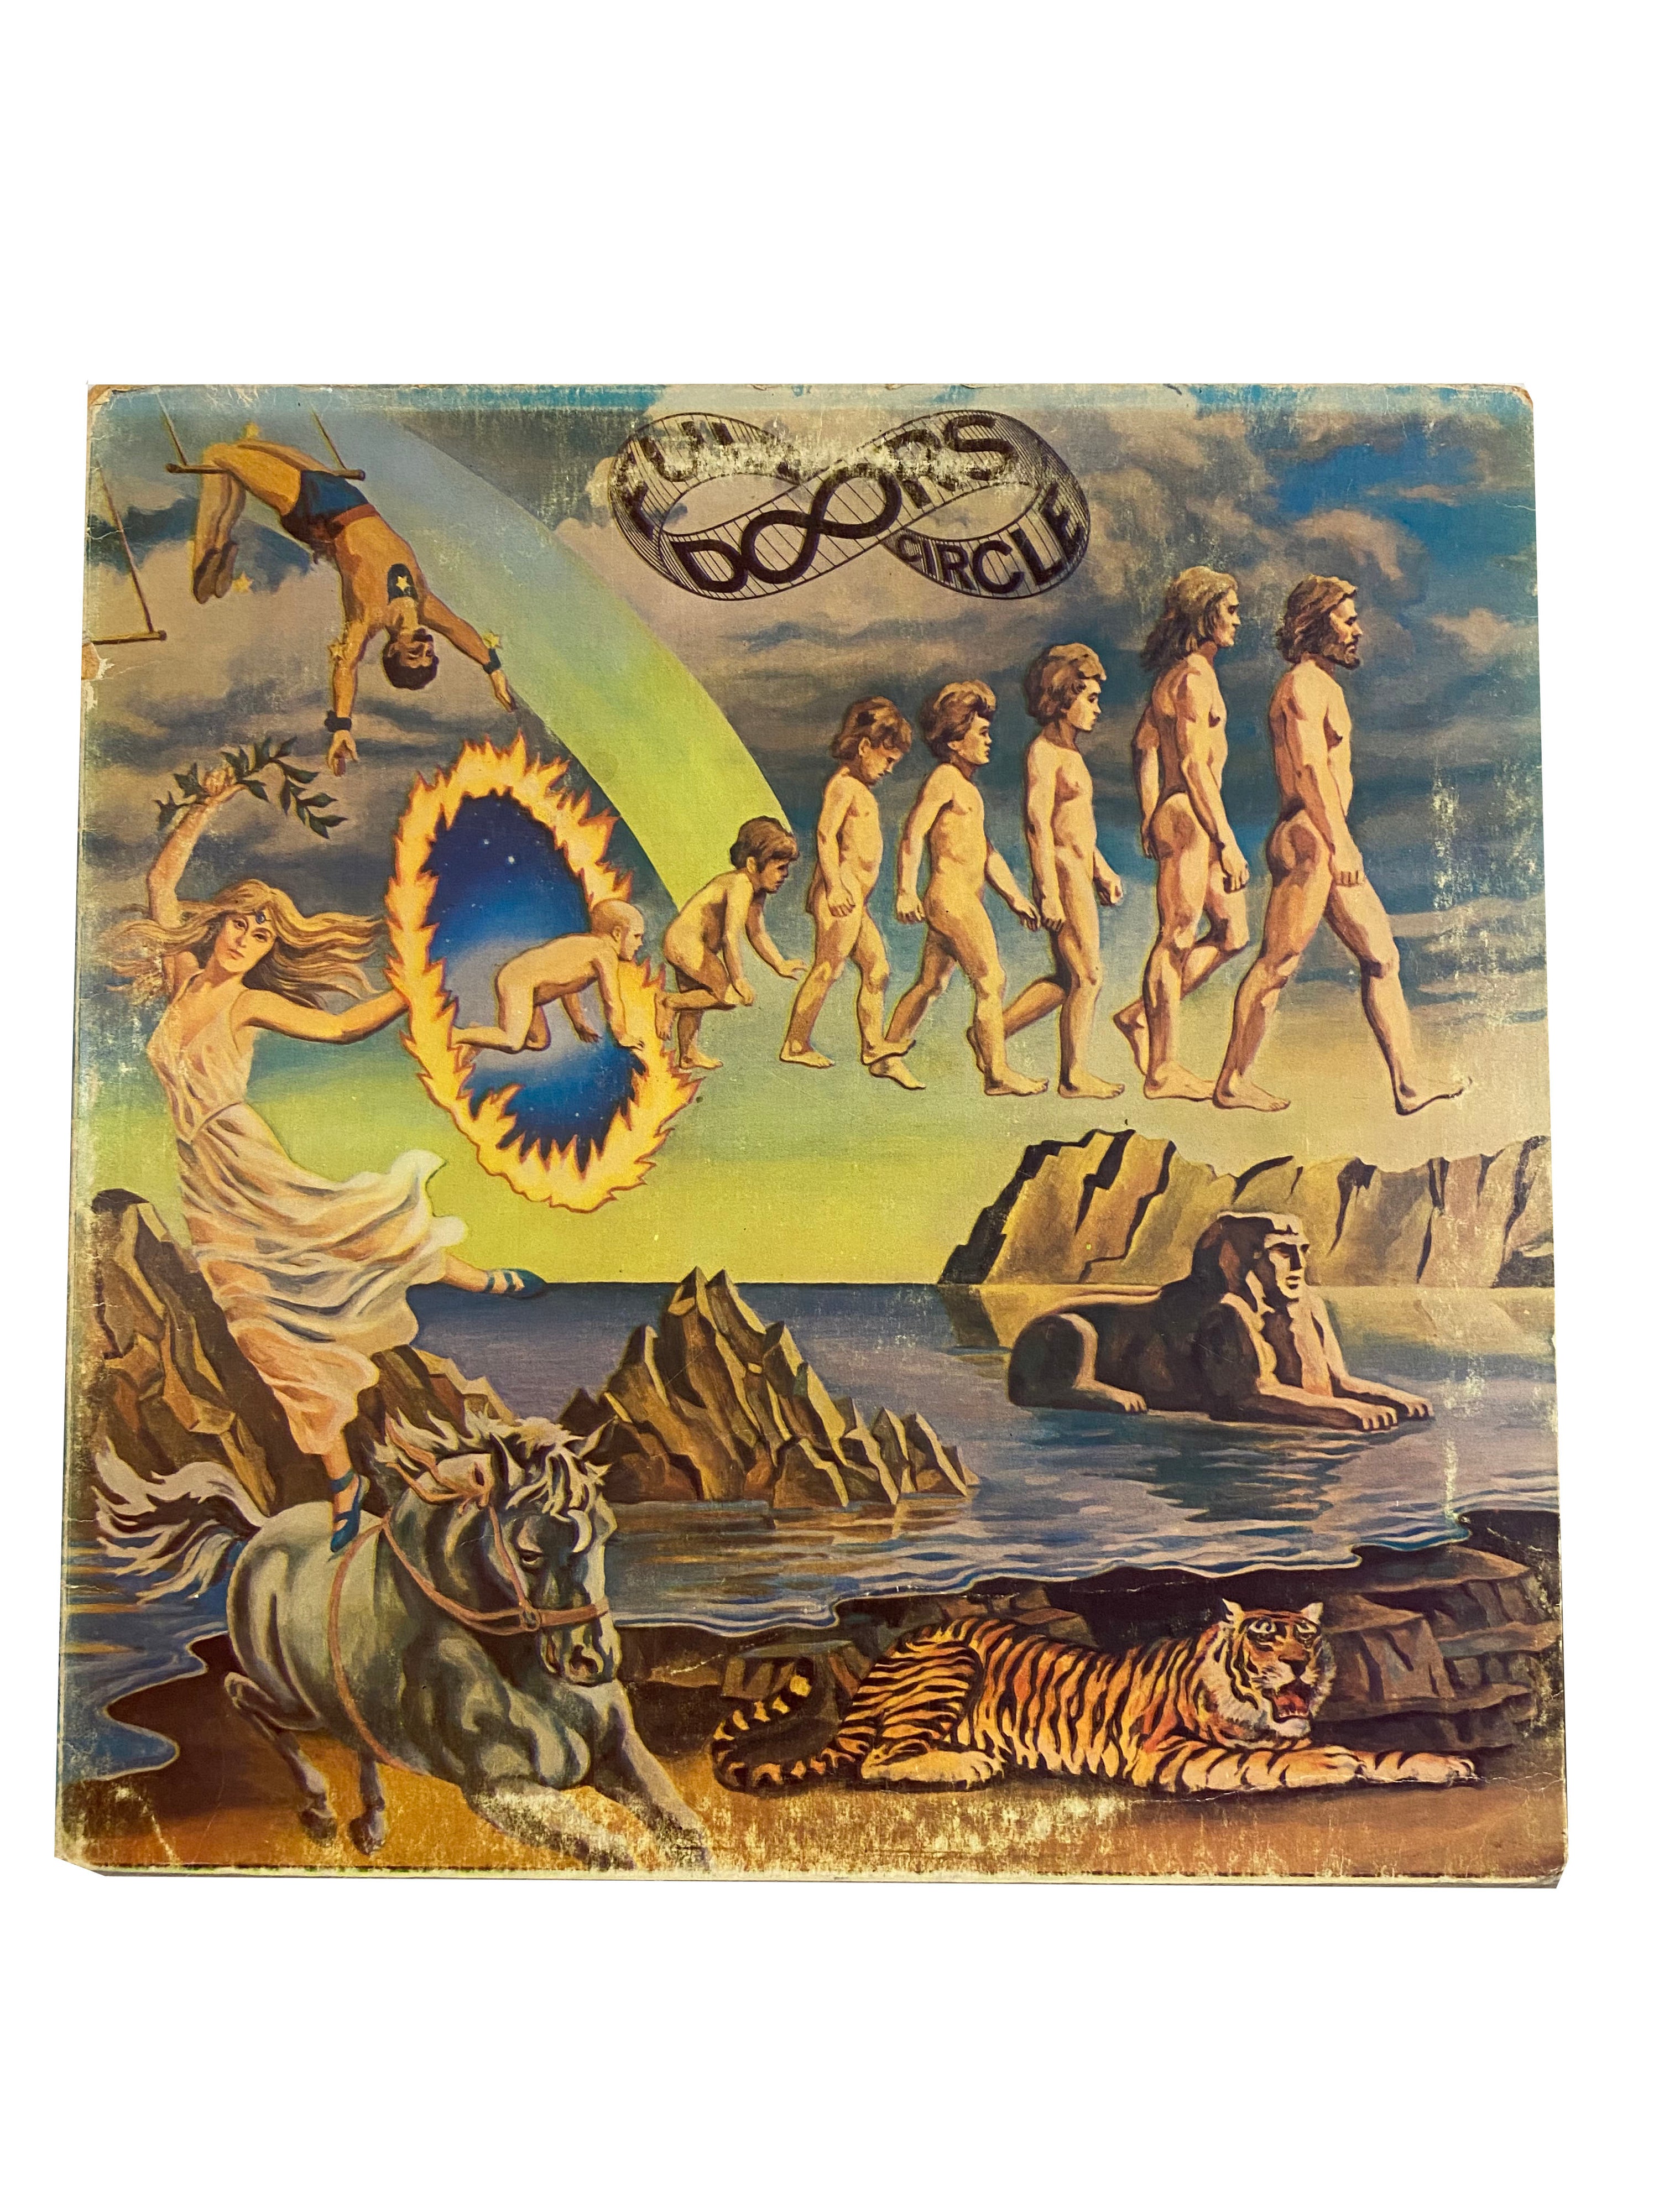 Full Circle (LP; Album: Gat), by The Doors